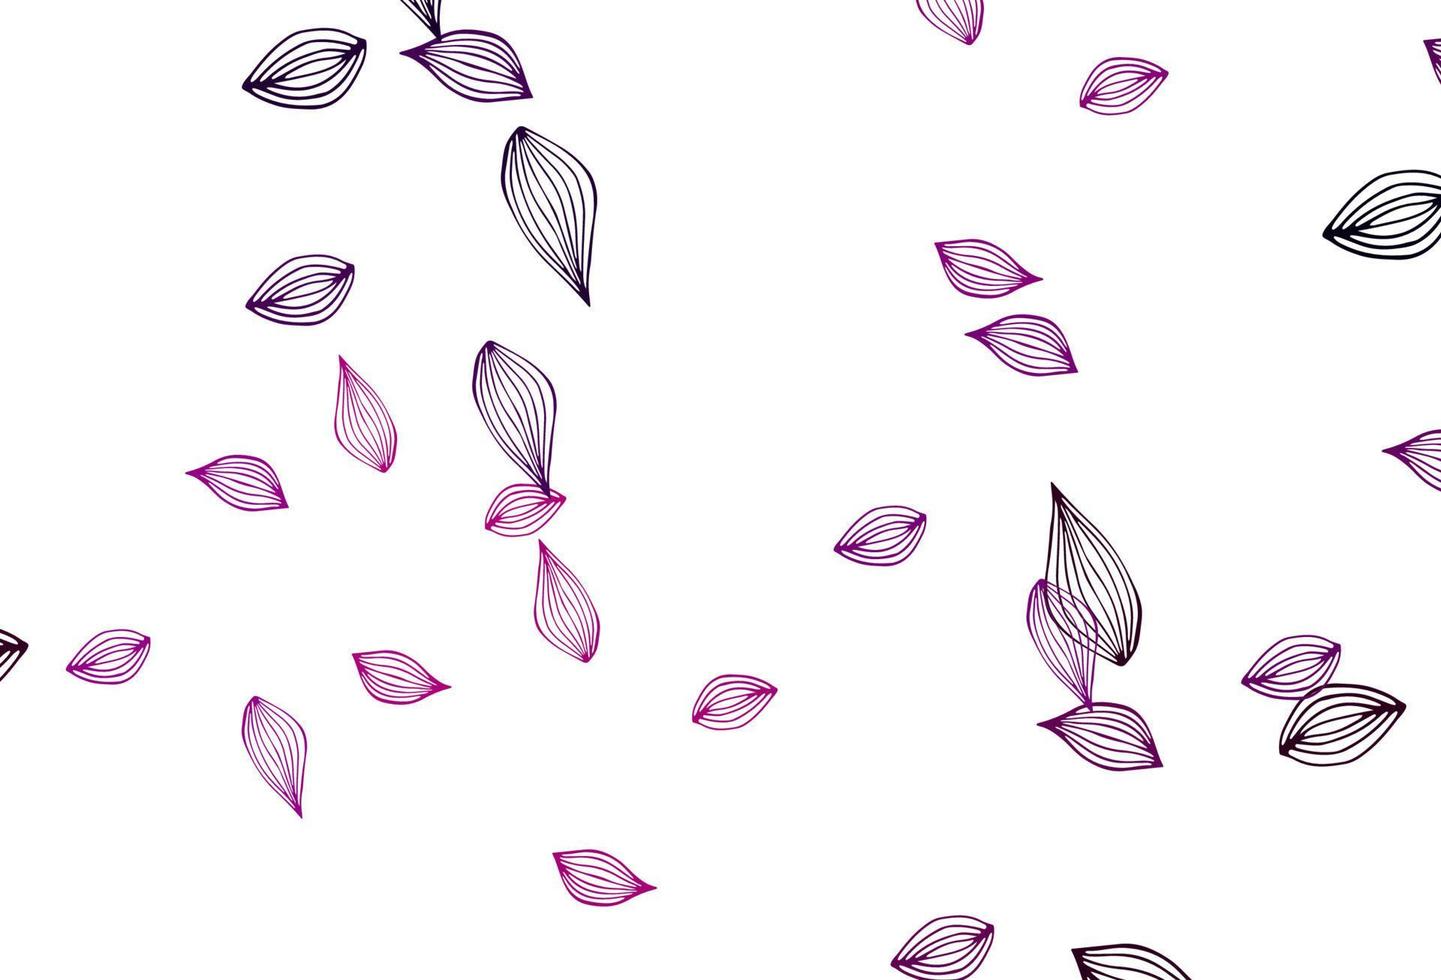 Light Purple vector sketch texture.